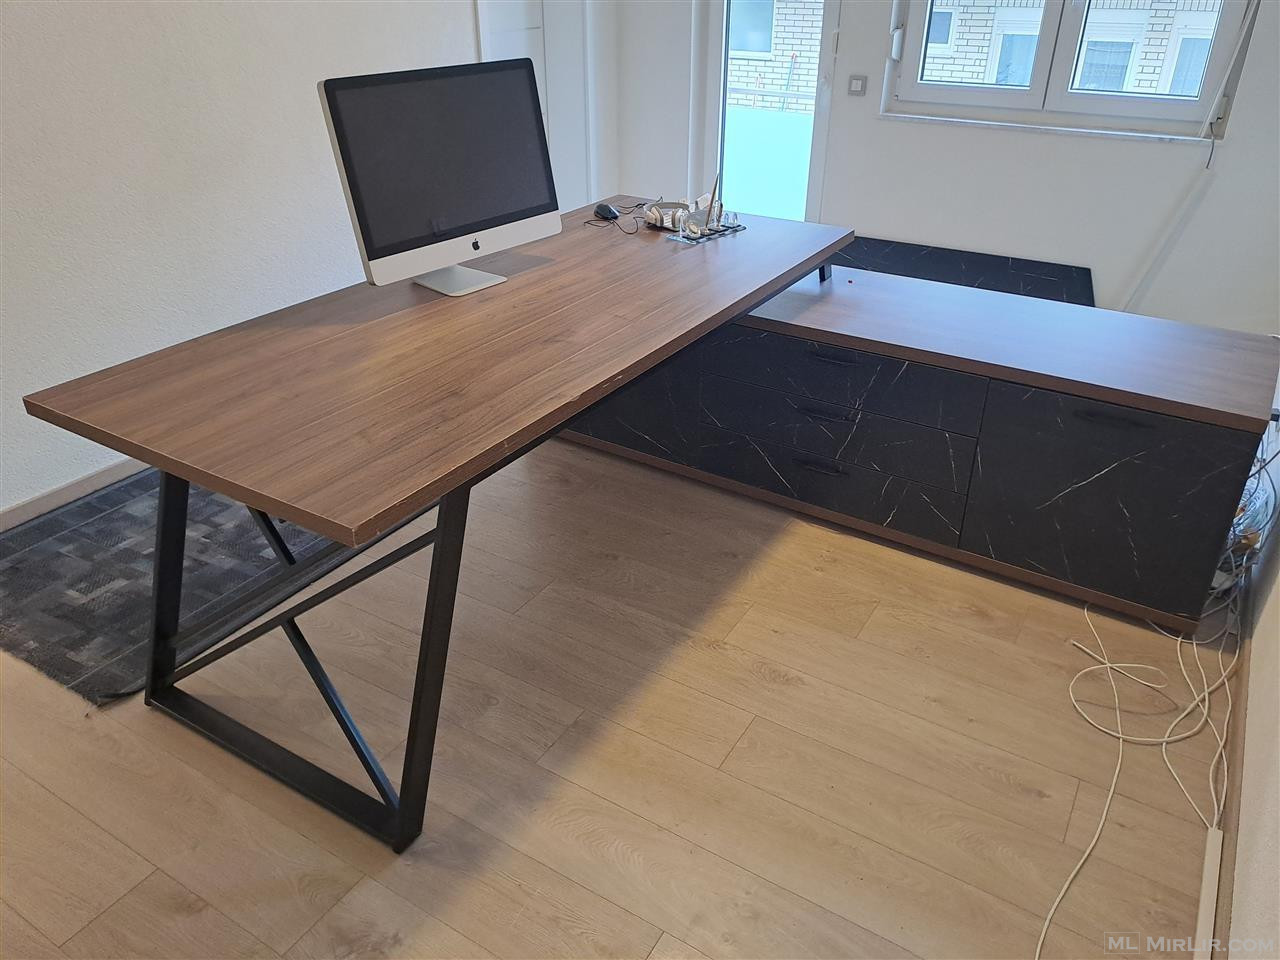 Tavolina per zyre